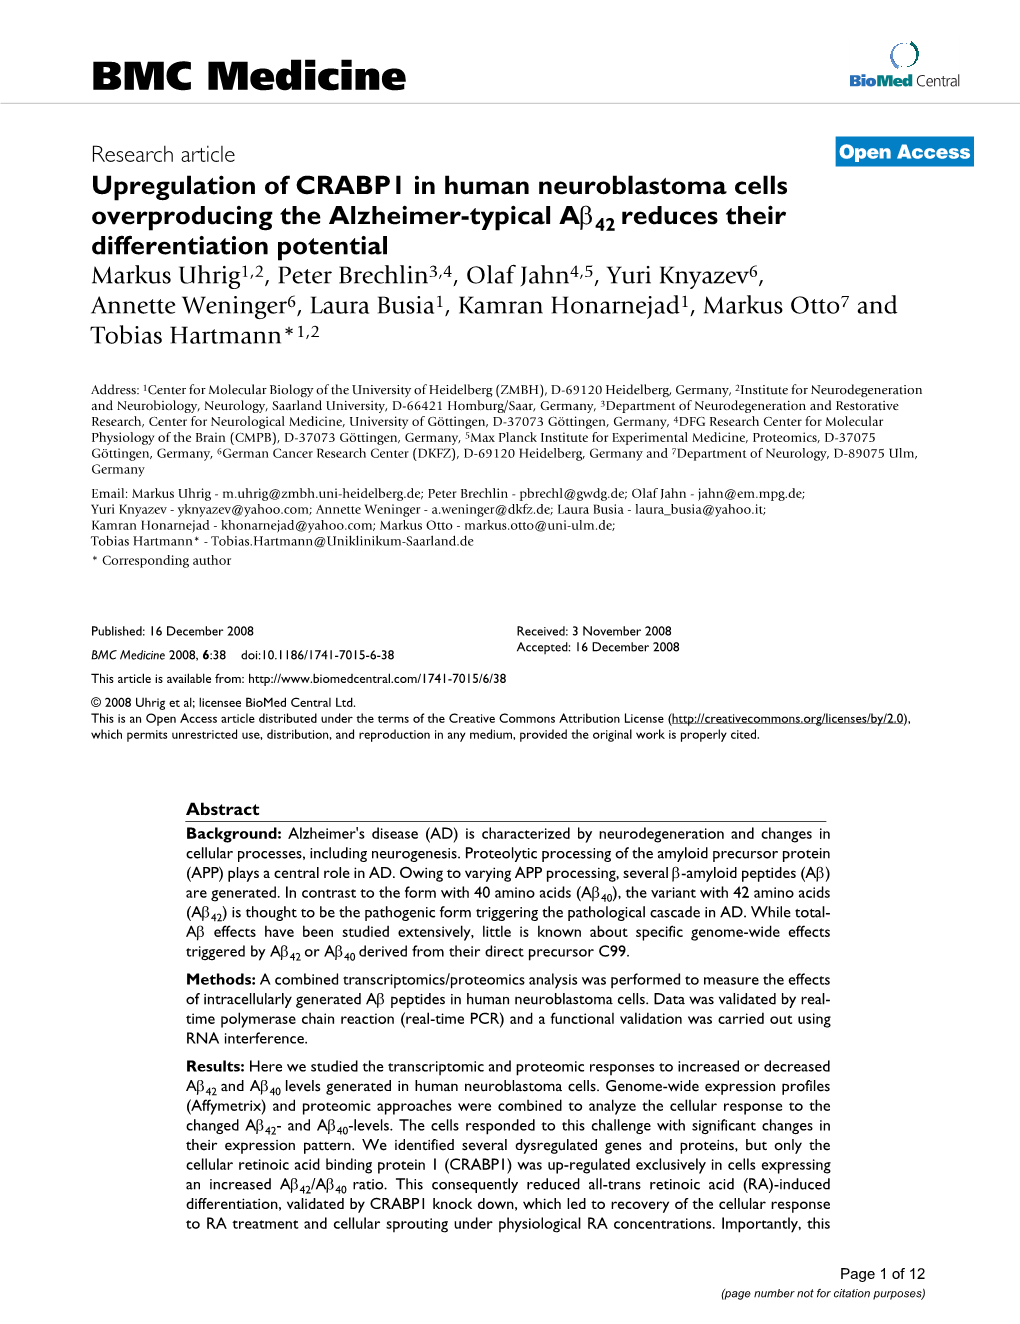 Upregulation of CRABP1 in Human Neuroblastoma Cells Overproducing